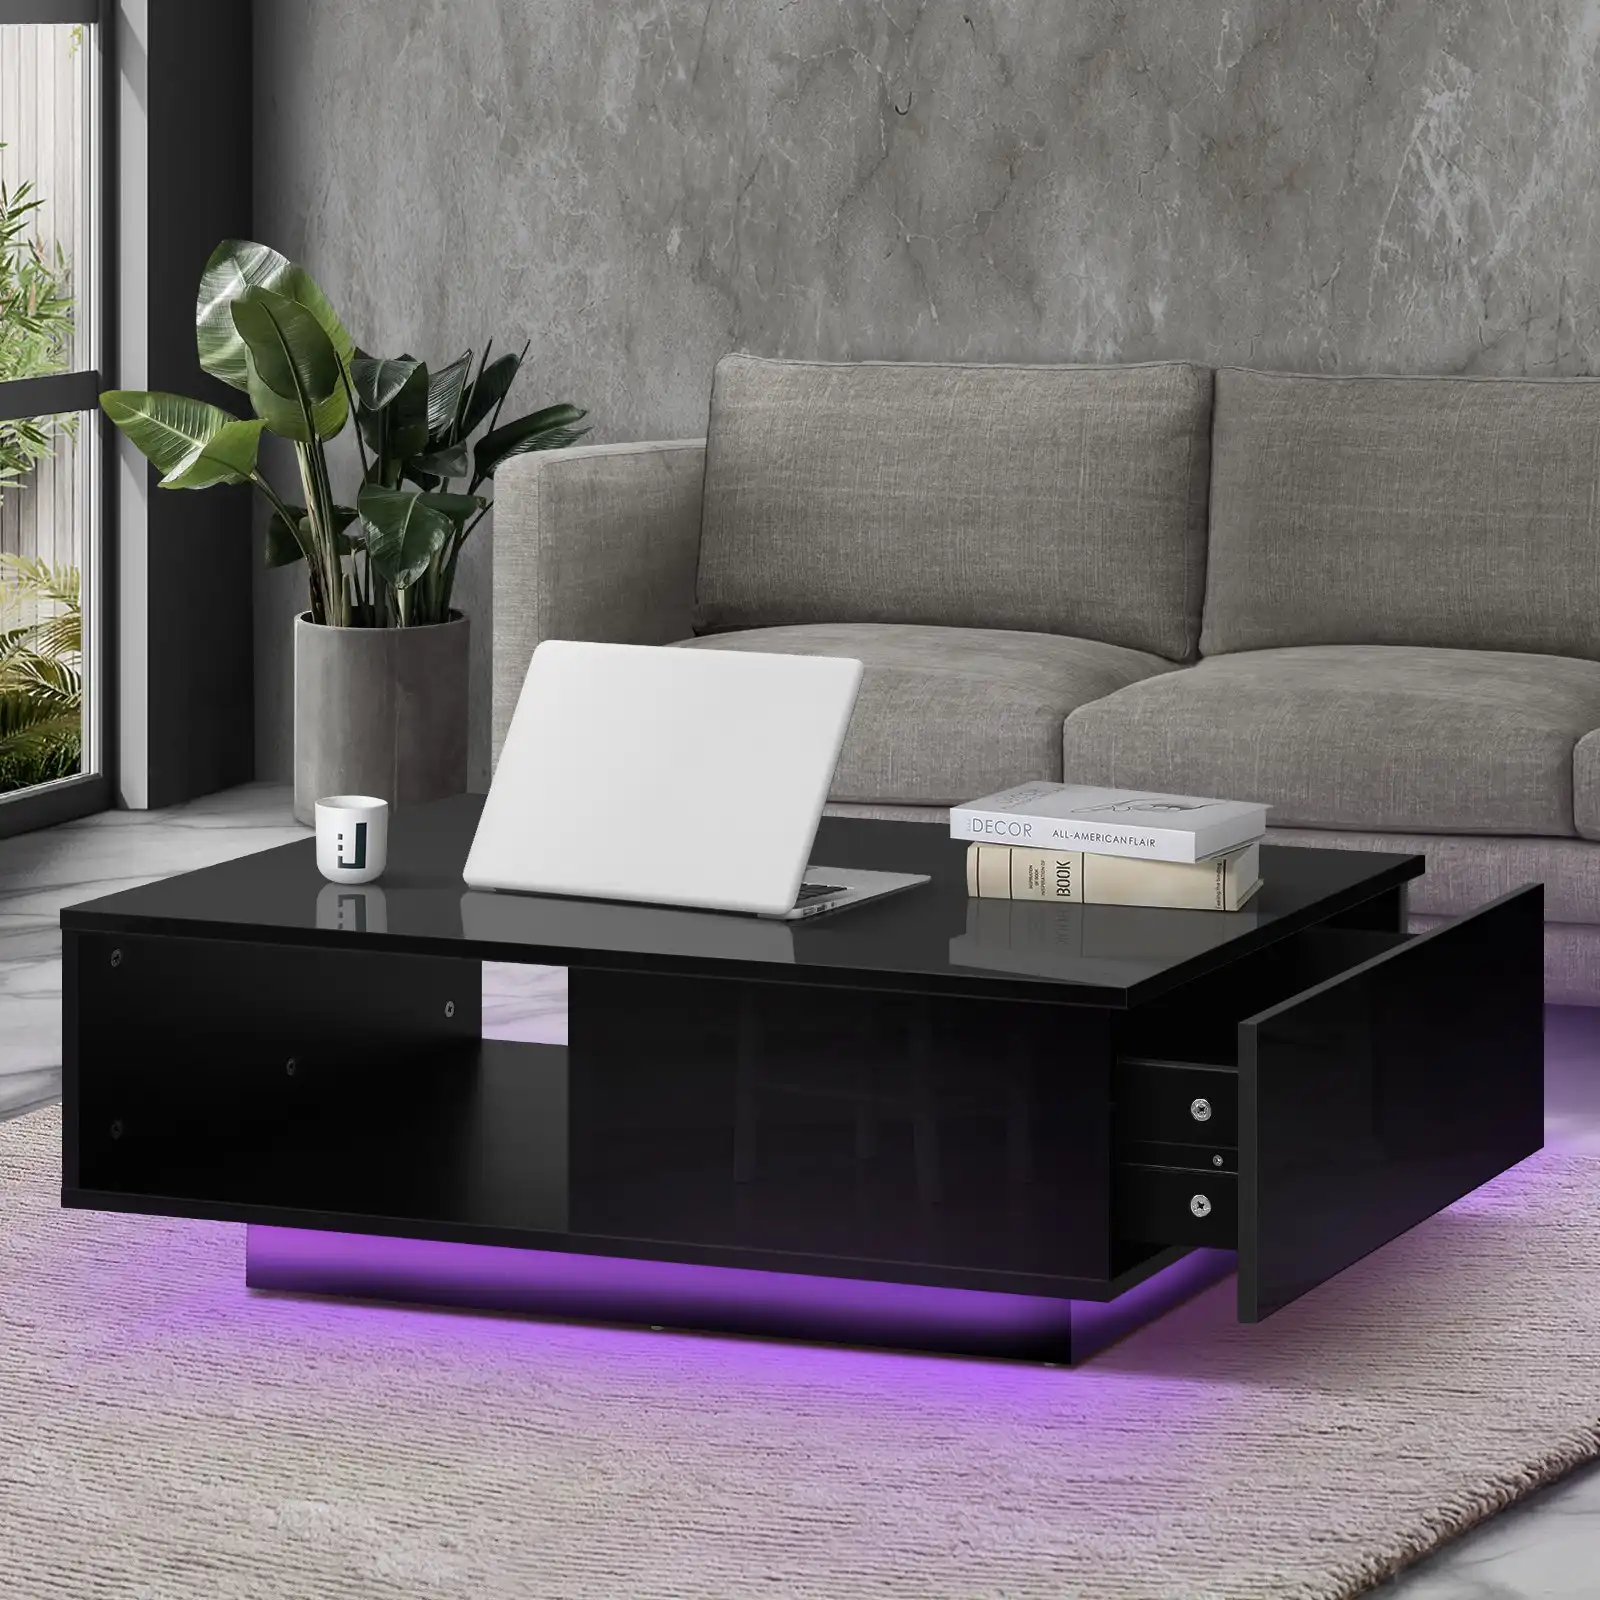 Oikiture Coffee Table LED Light High Gloss Storage Drawer Modern Furniture Black